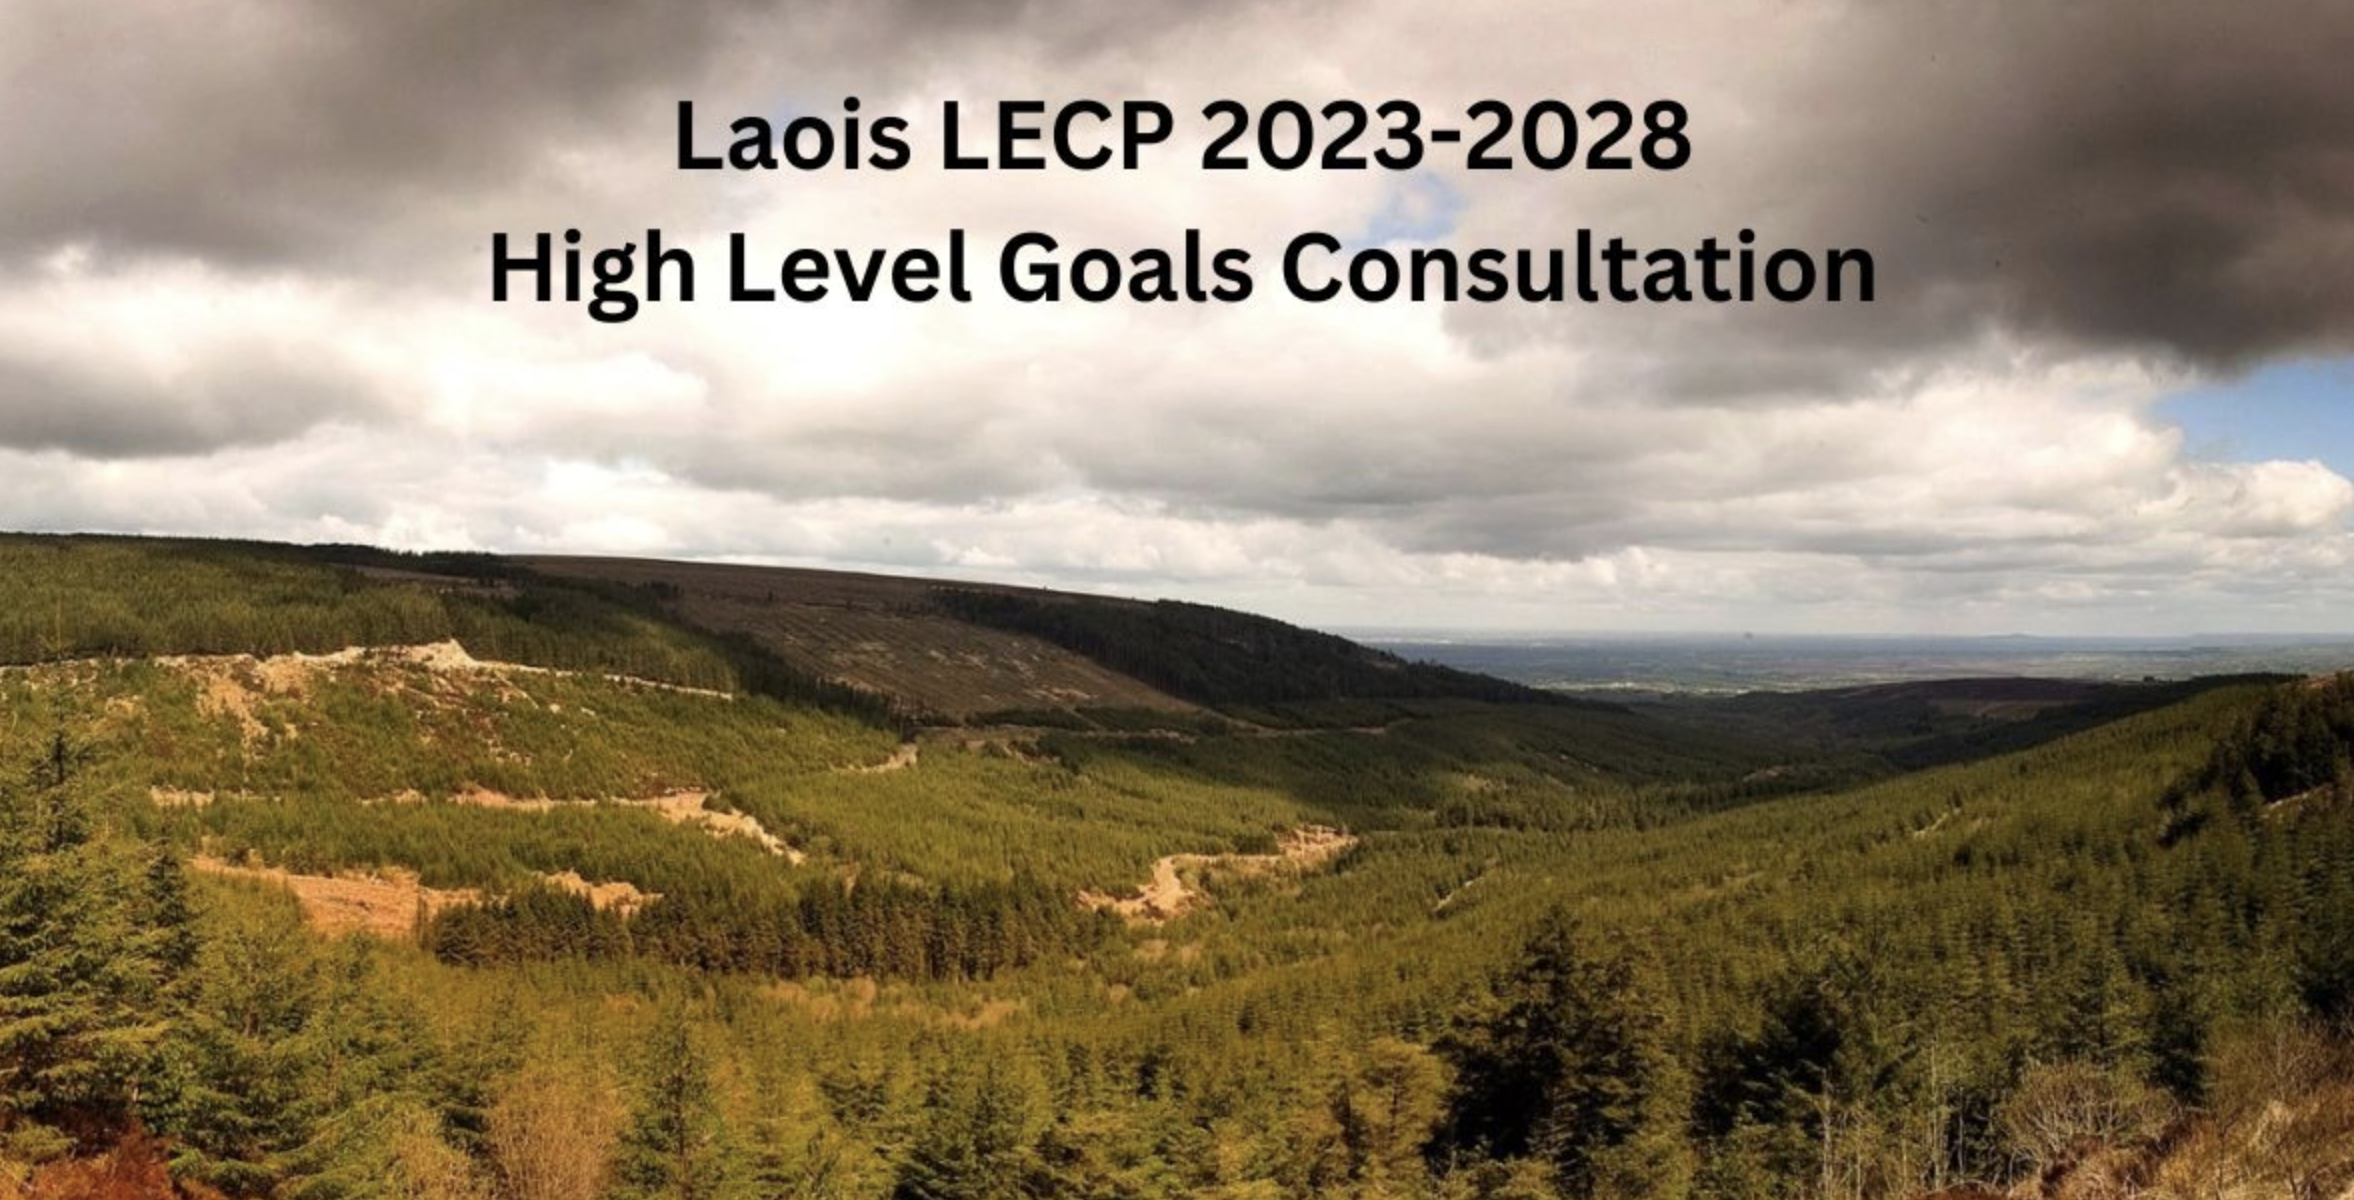 Image of Landscape - Laois LECP 2023-2028 High Level Goals Consultation